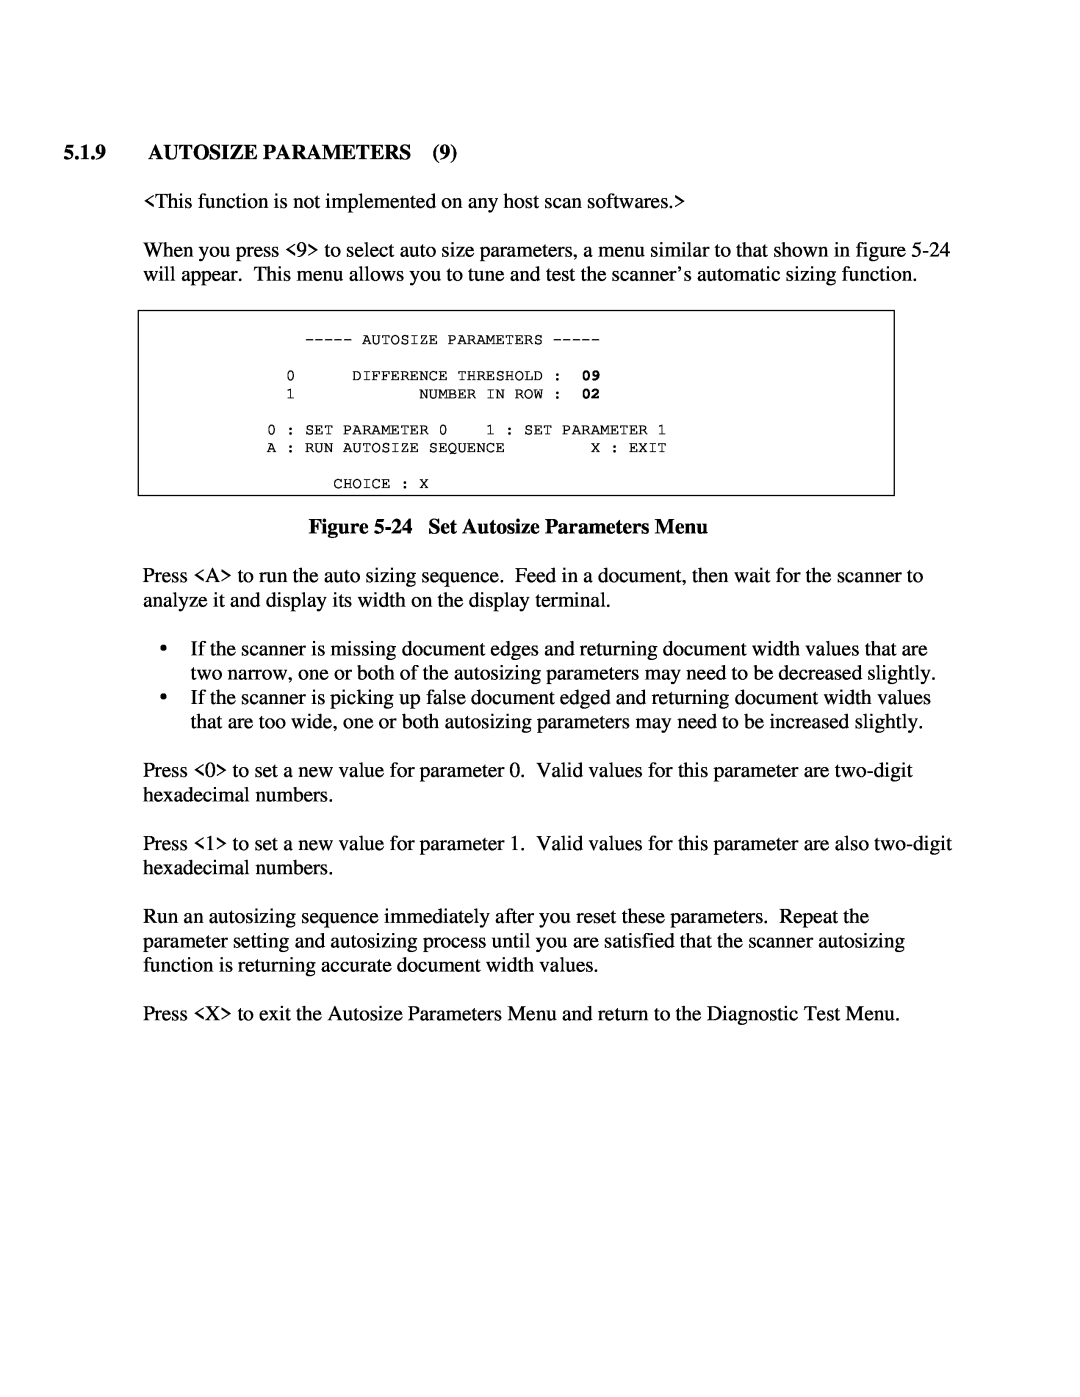 IBM CF Series manual 24 Set Autosize Parameters Menu 